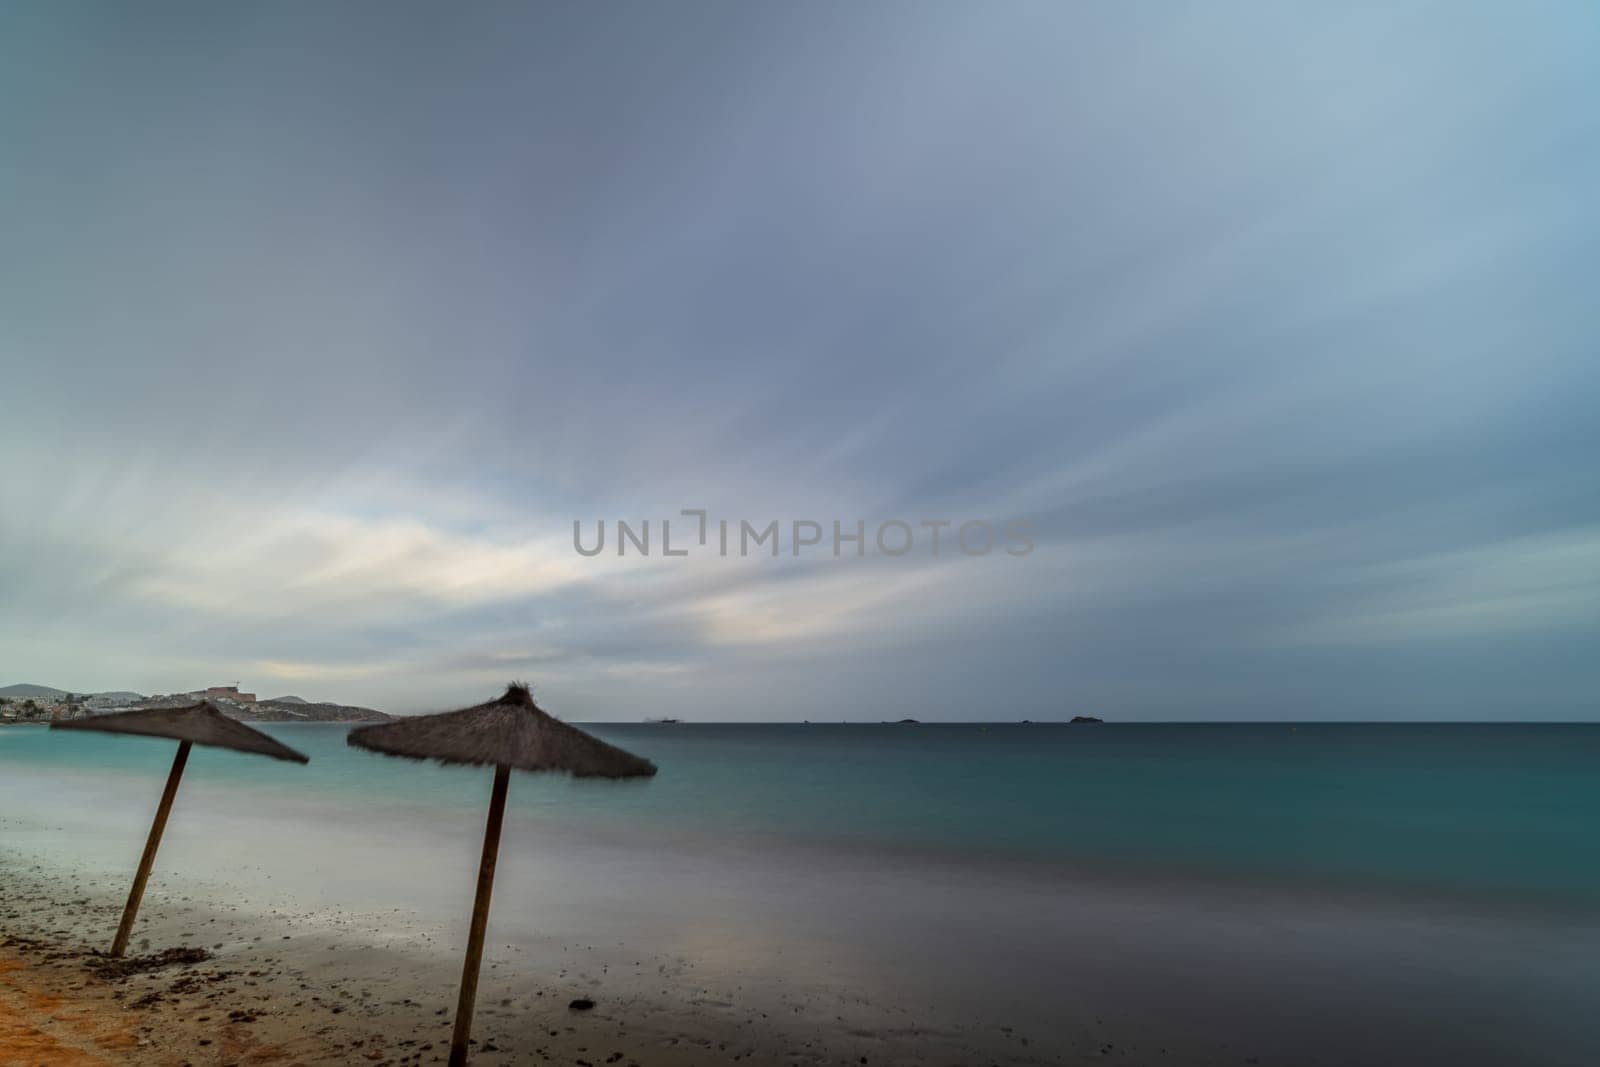 Stormy Day on a Lonely, Desolate White Sand Beach with Straw Umbrellas by FerradalFCG